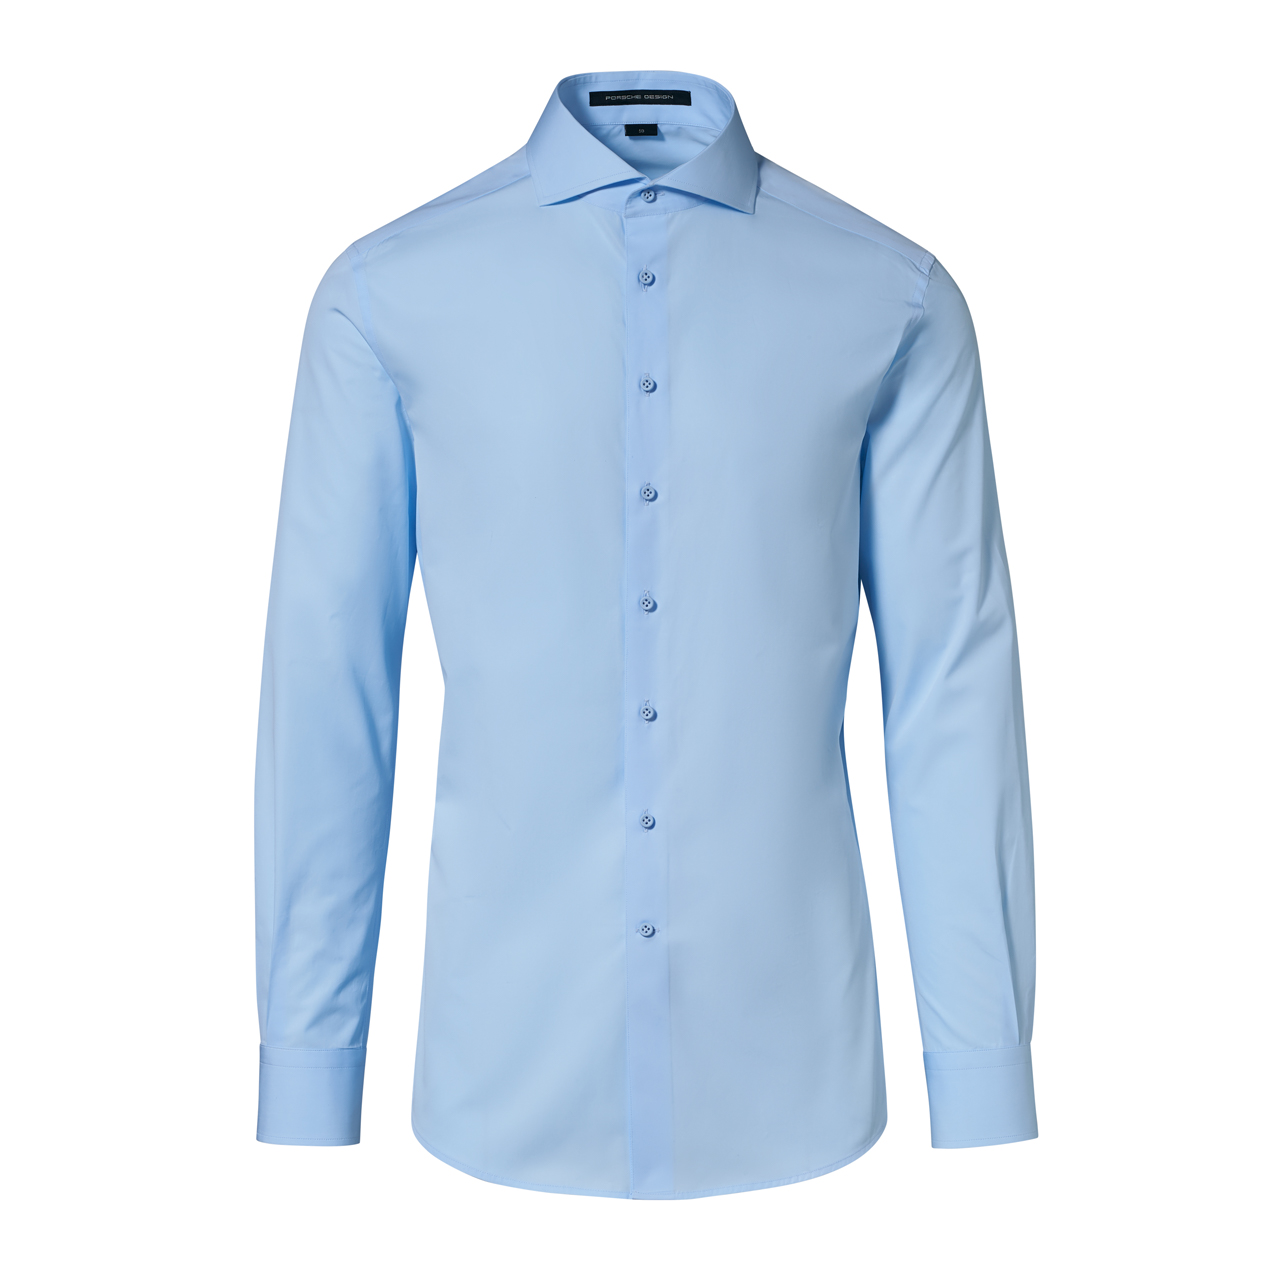 Beige Tan Viscose M Handmade Designer Italy Slim Formal Dress Button Down Mens Sport Oxford Shirt Long Sleeve Collared Business Casual